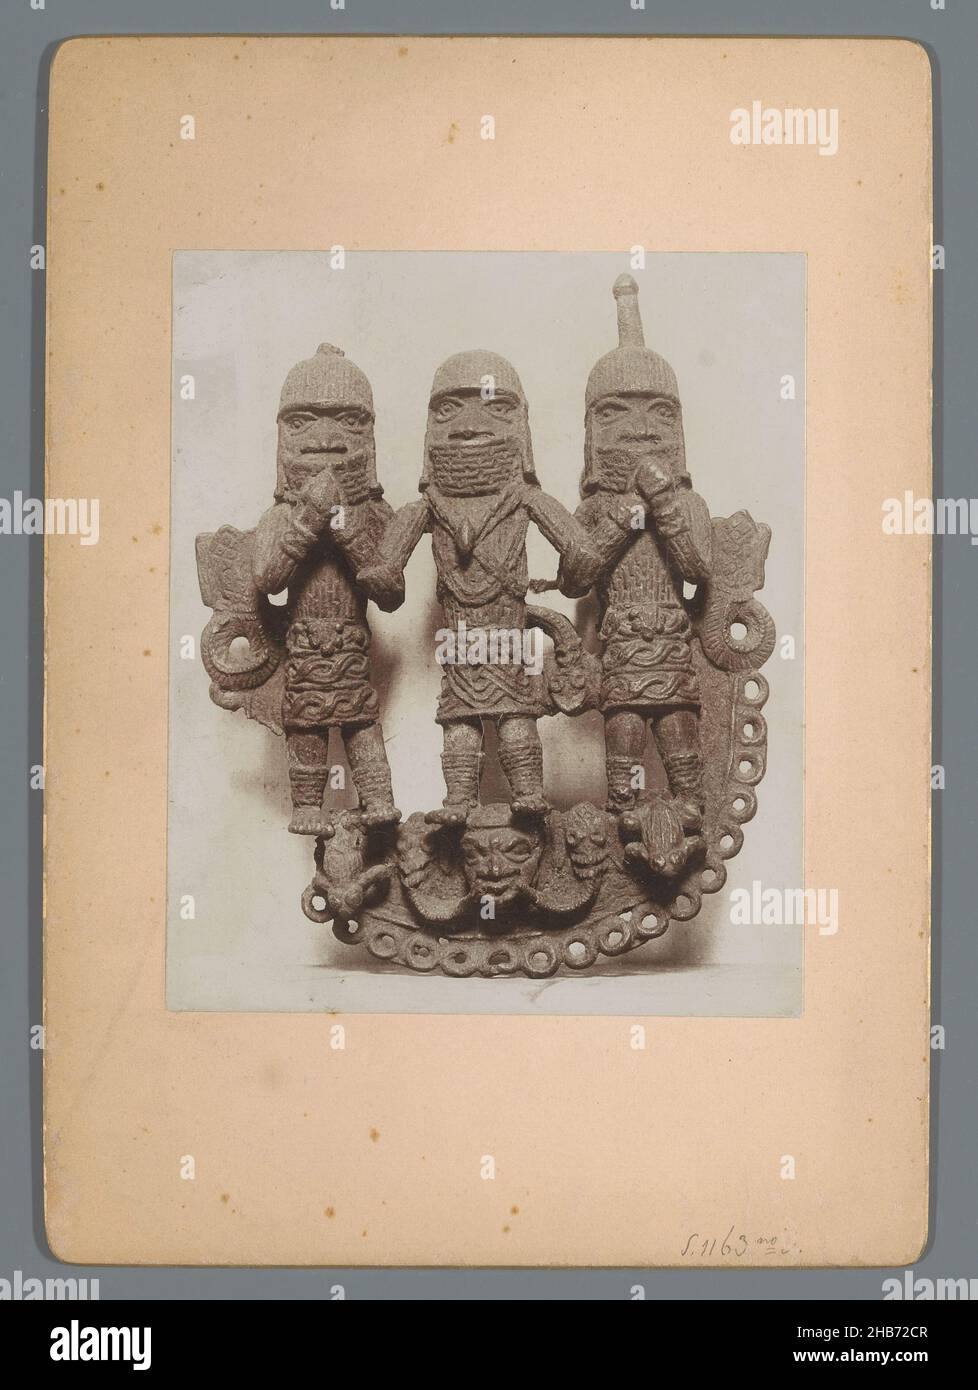 Tres estatuas de bronce de Benin, anónimo, 1880 - 1940, papel de baryta, cartón, altura 179 mm x anchura 129 mm Foto de stock